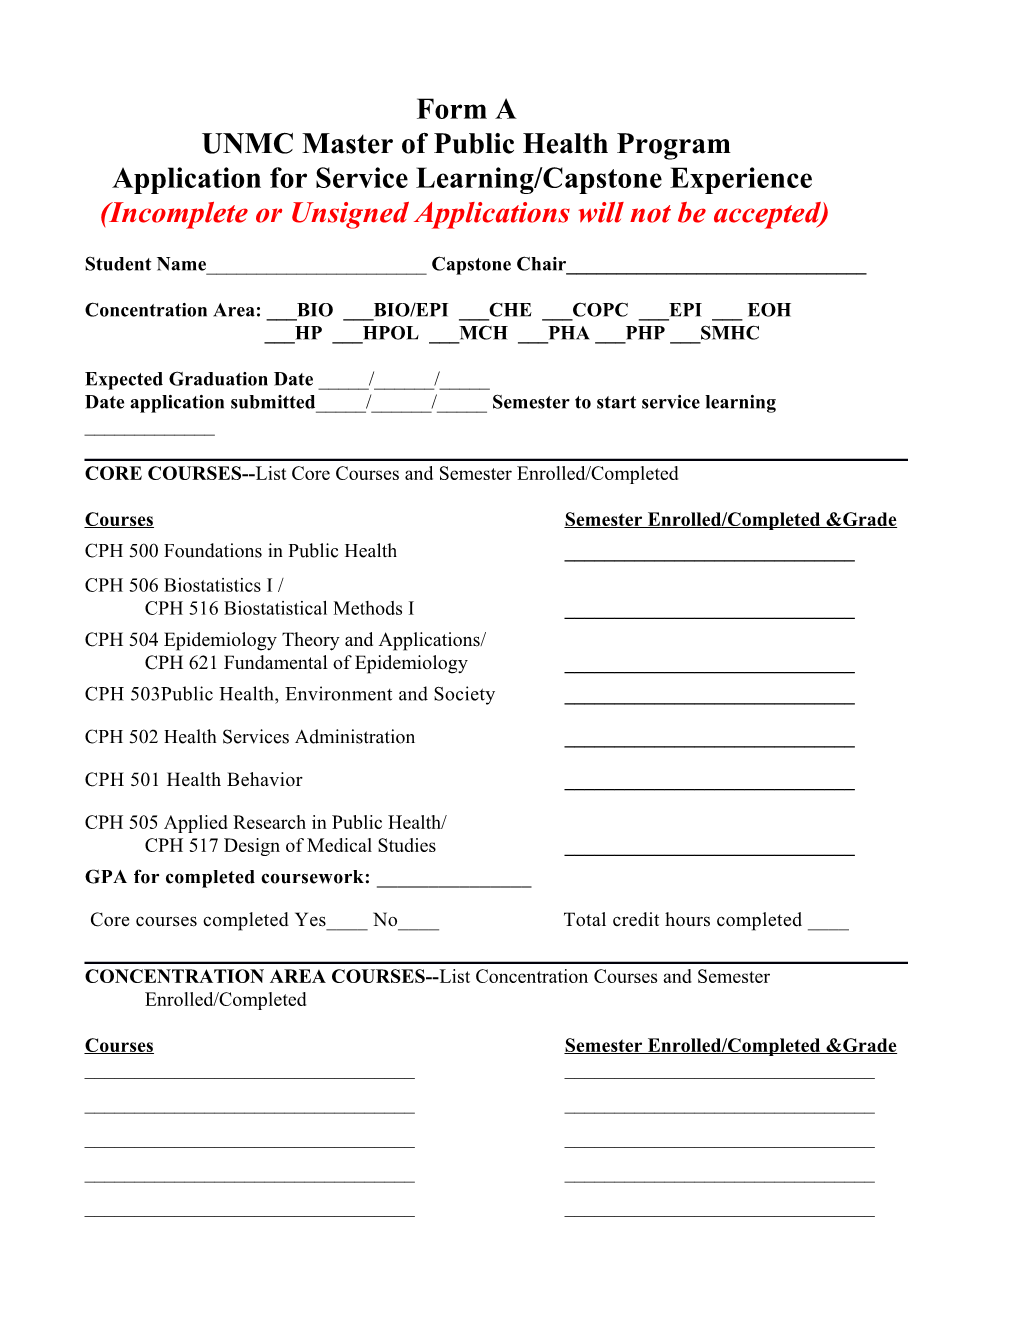 MPH Service Learning/Capstone Experience Handbook